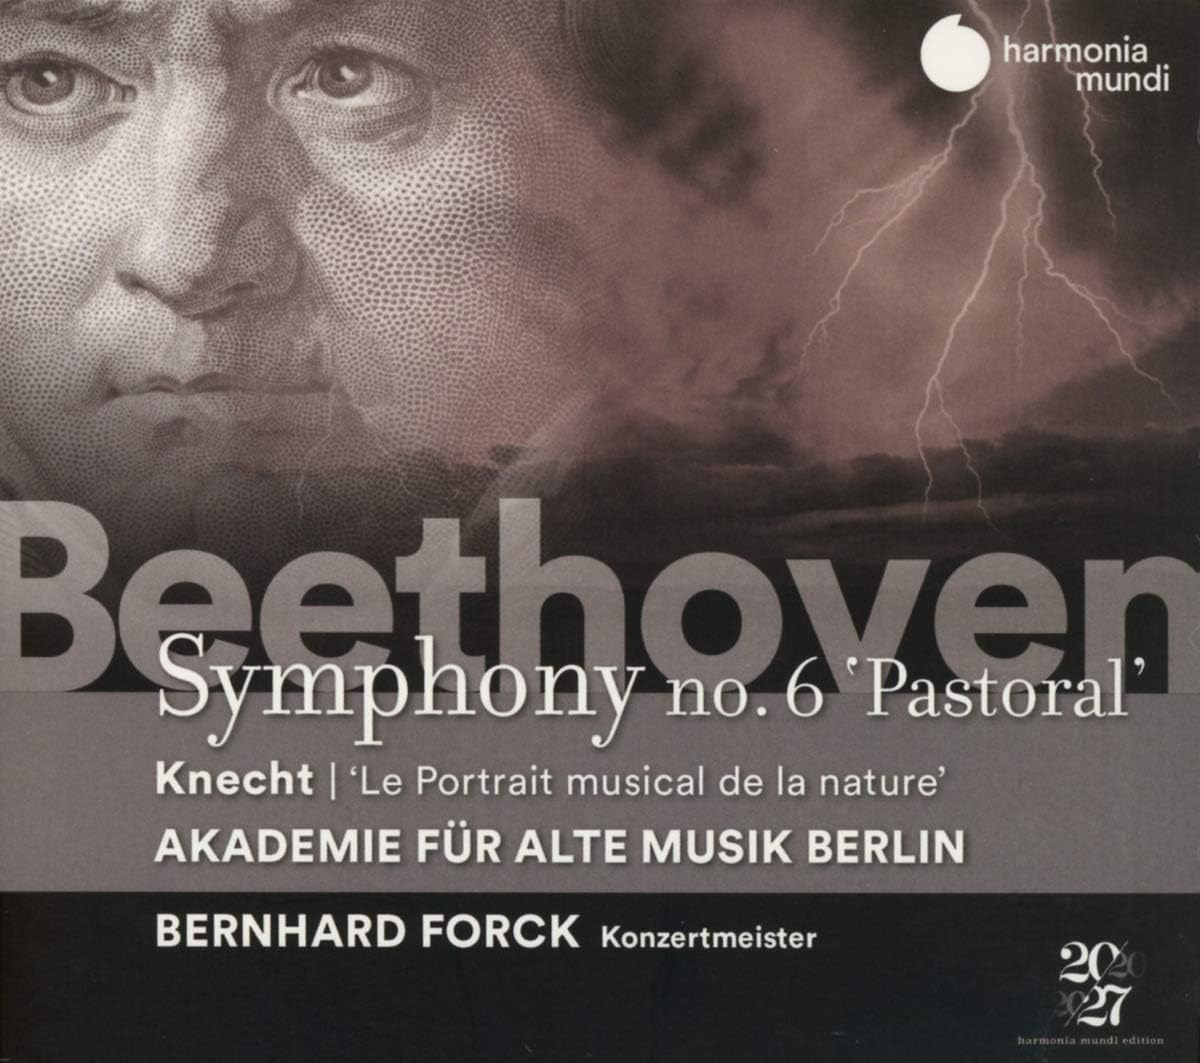 Beethoven: Symphony No. 6 "Pastoral" | Justin Heinrich Knecht, Akademie fur Alte Musik Berlin, Bernhard Forck